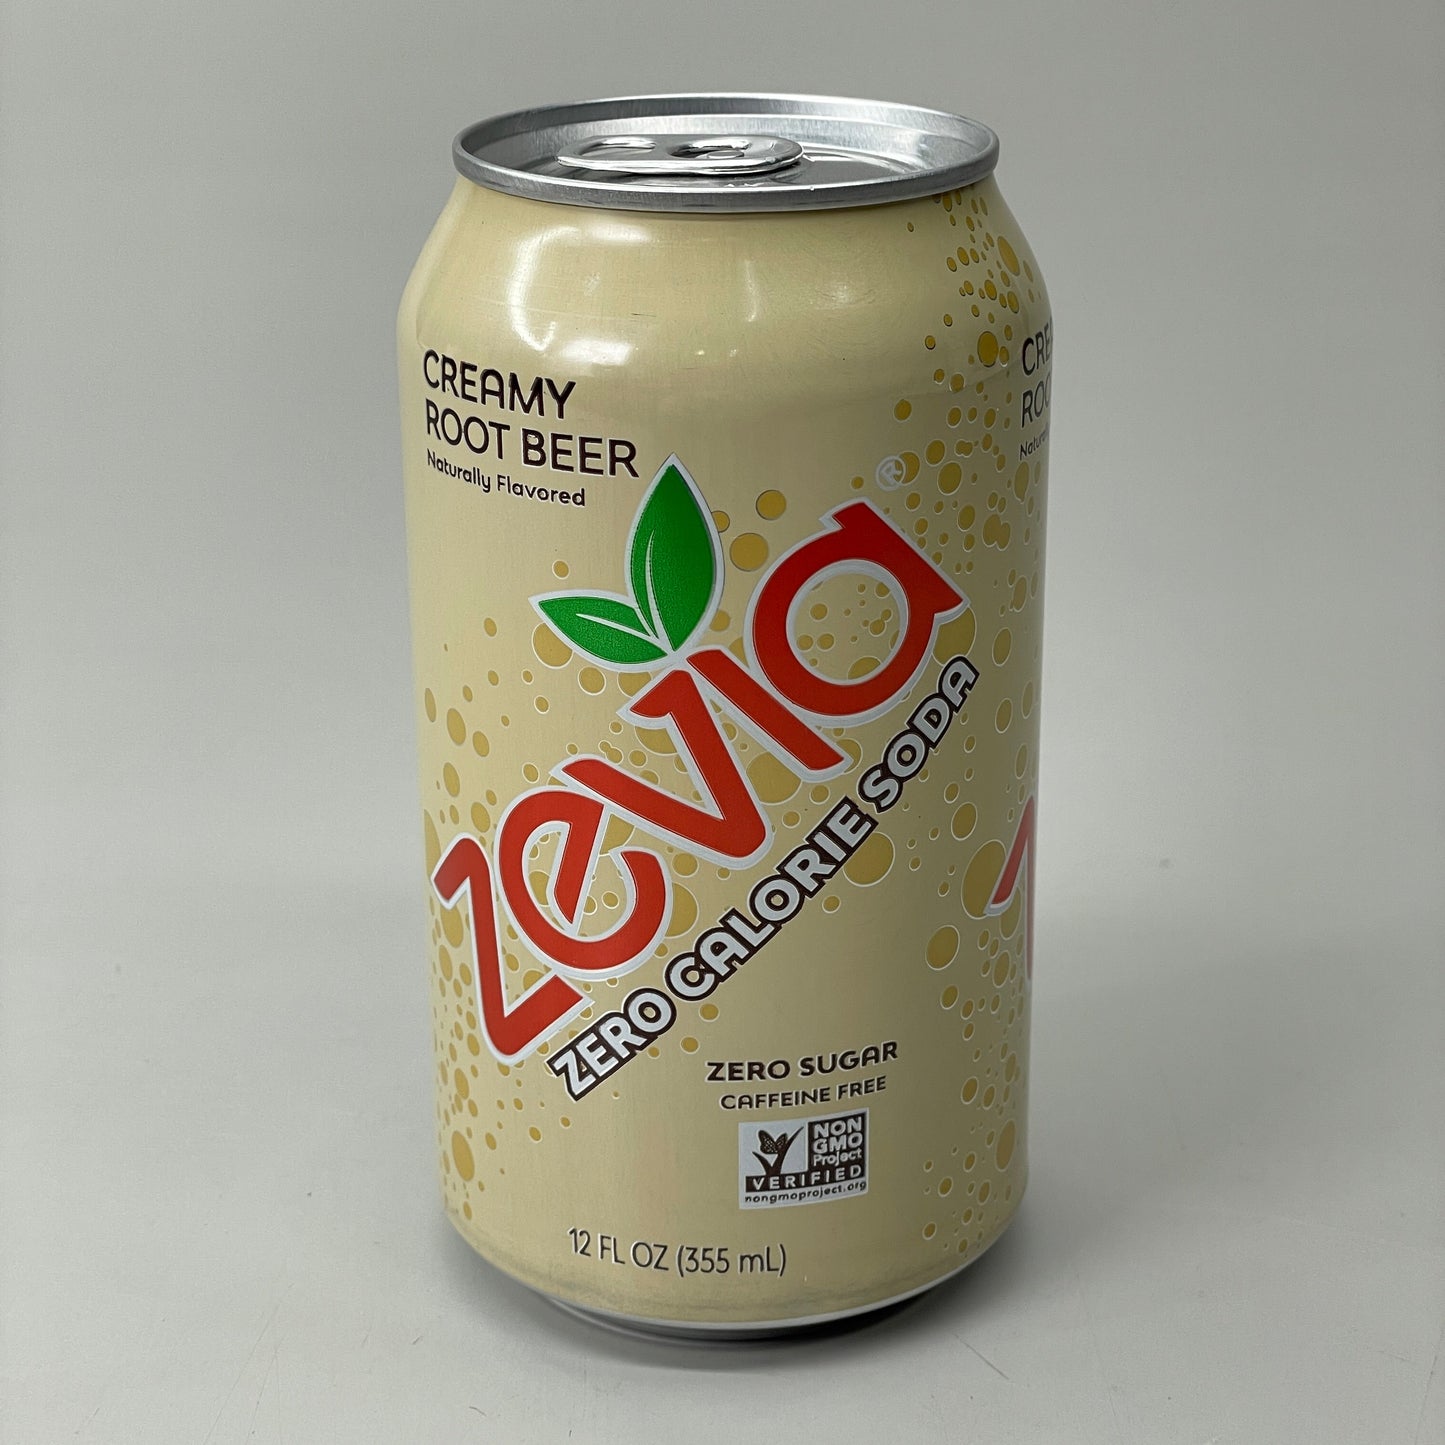 ZA@ ZEVIA 24 PACK!! Creamy Root Beer New Flavor Carbonated Beverages 12oz New Flavor (10/24) G